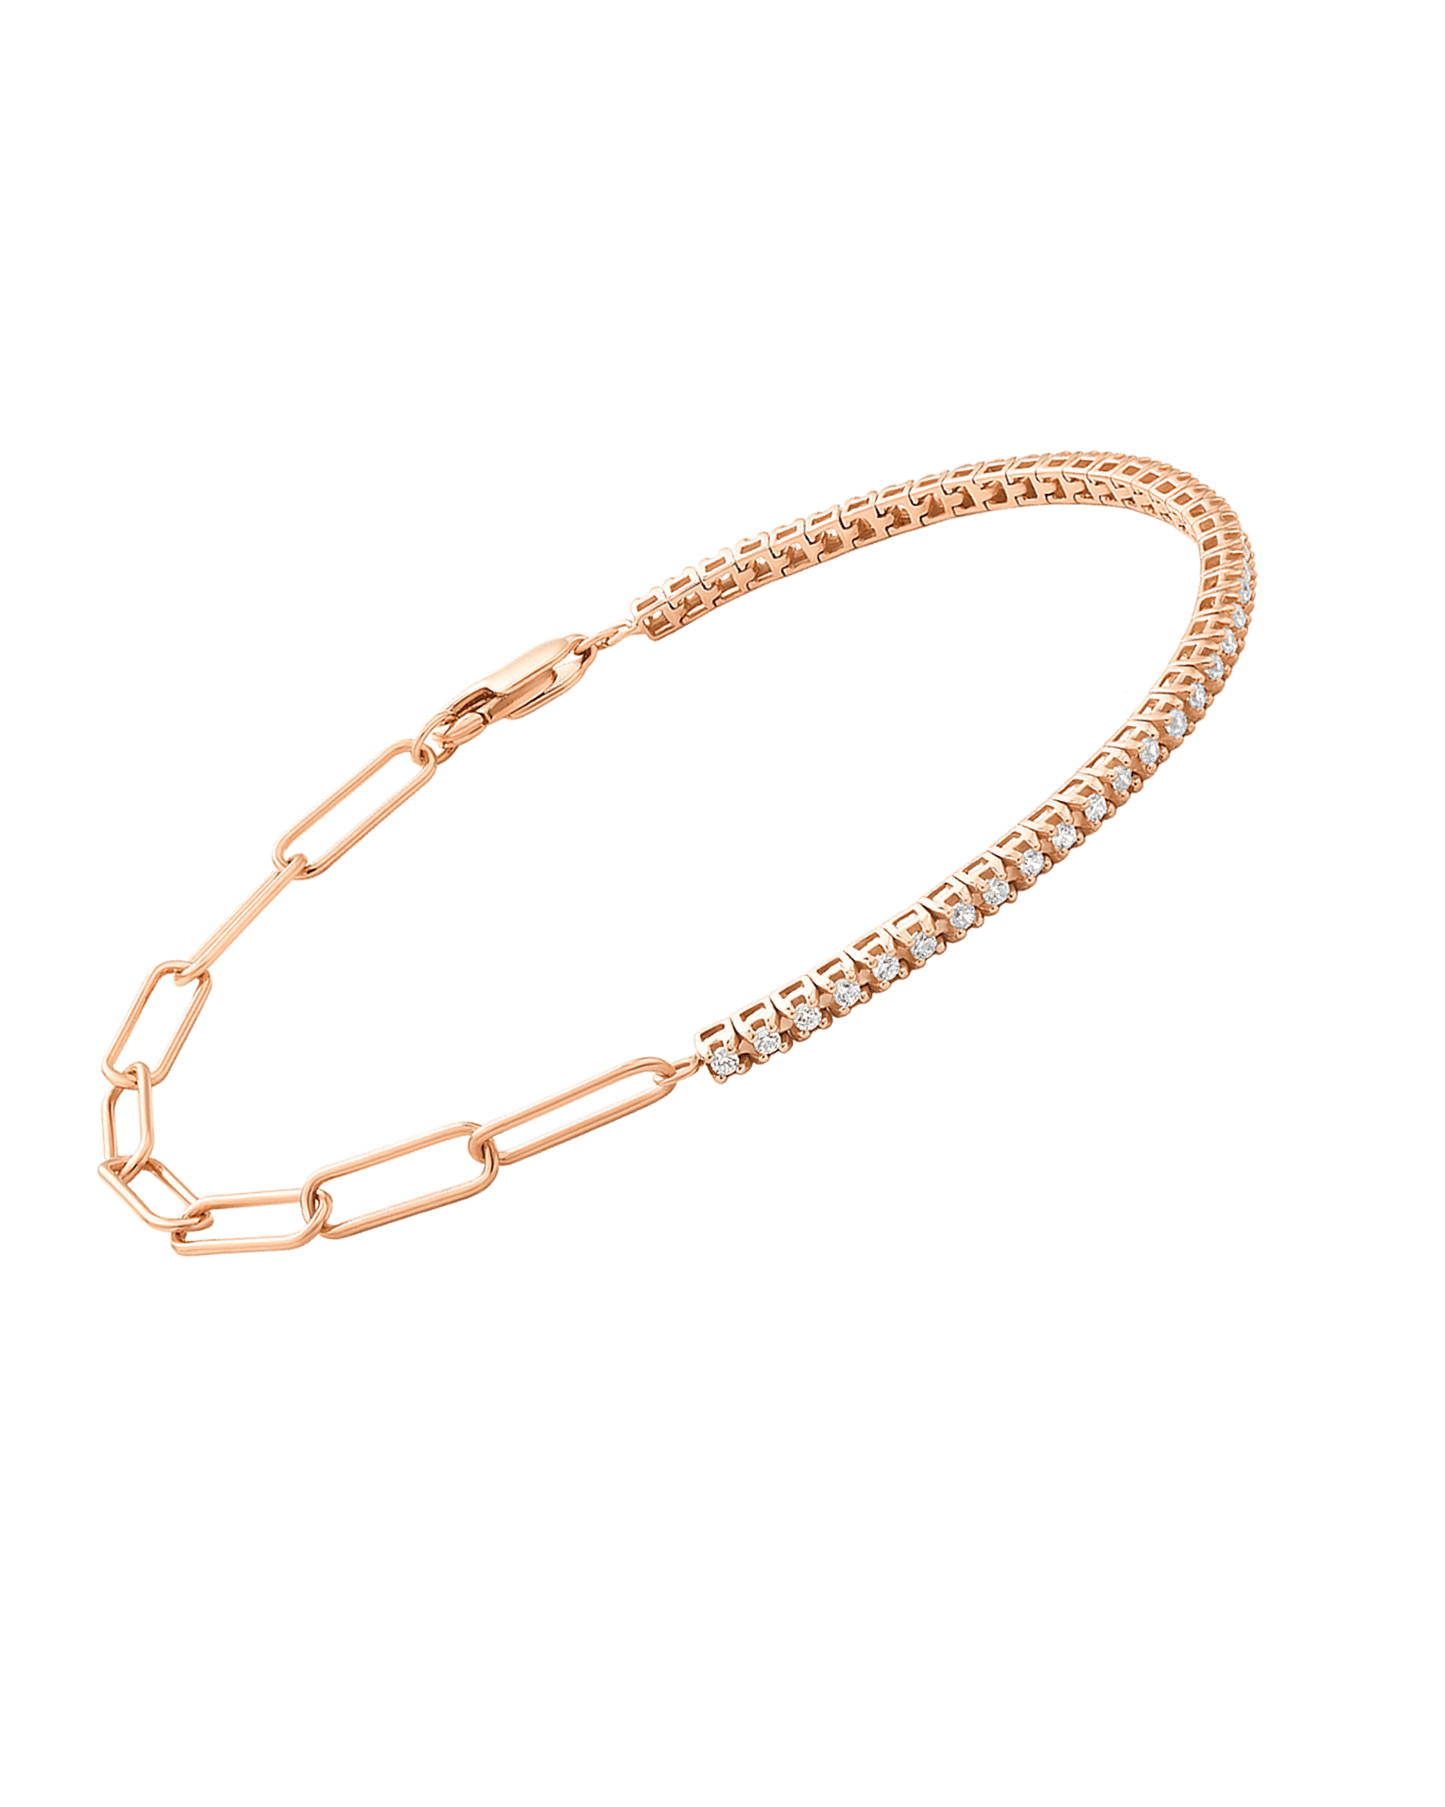 Diamond and Chain Bracelet - 14K Yellow Gold Bracelets magal-dev 